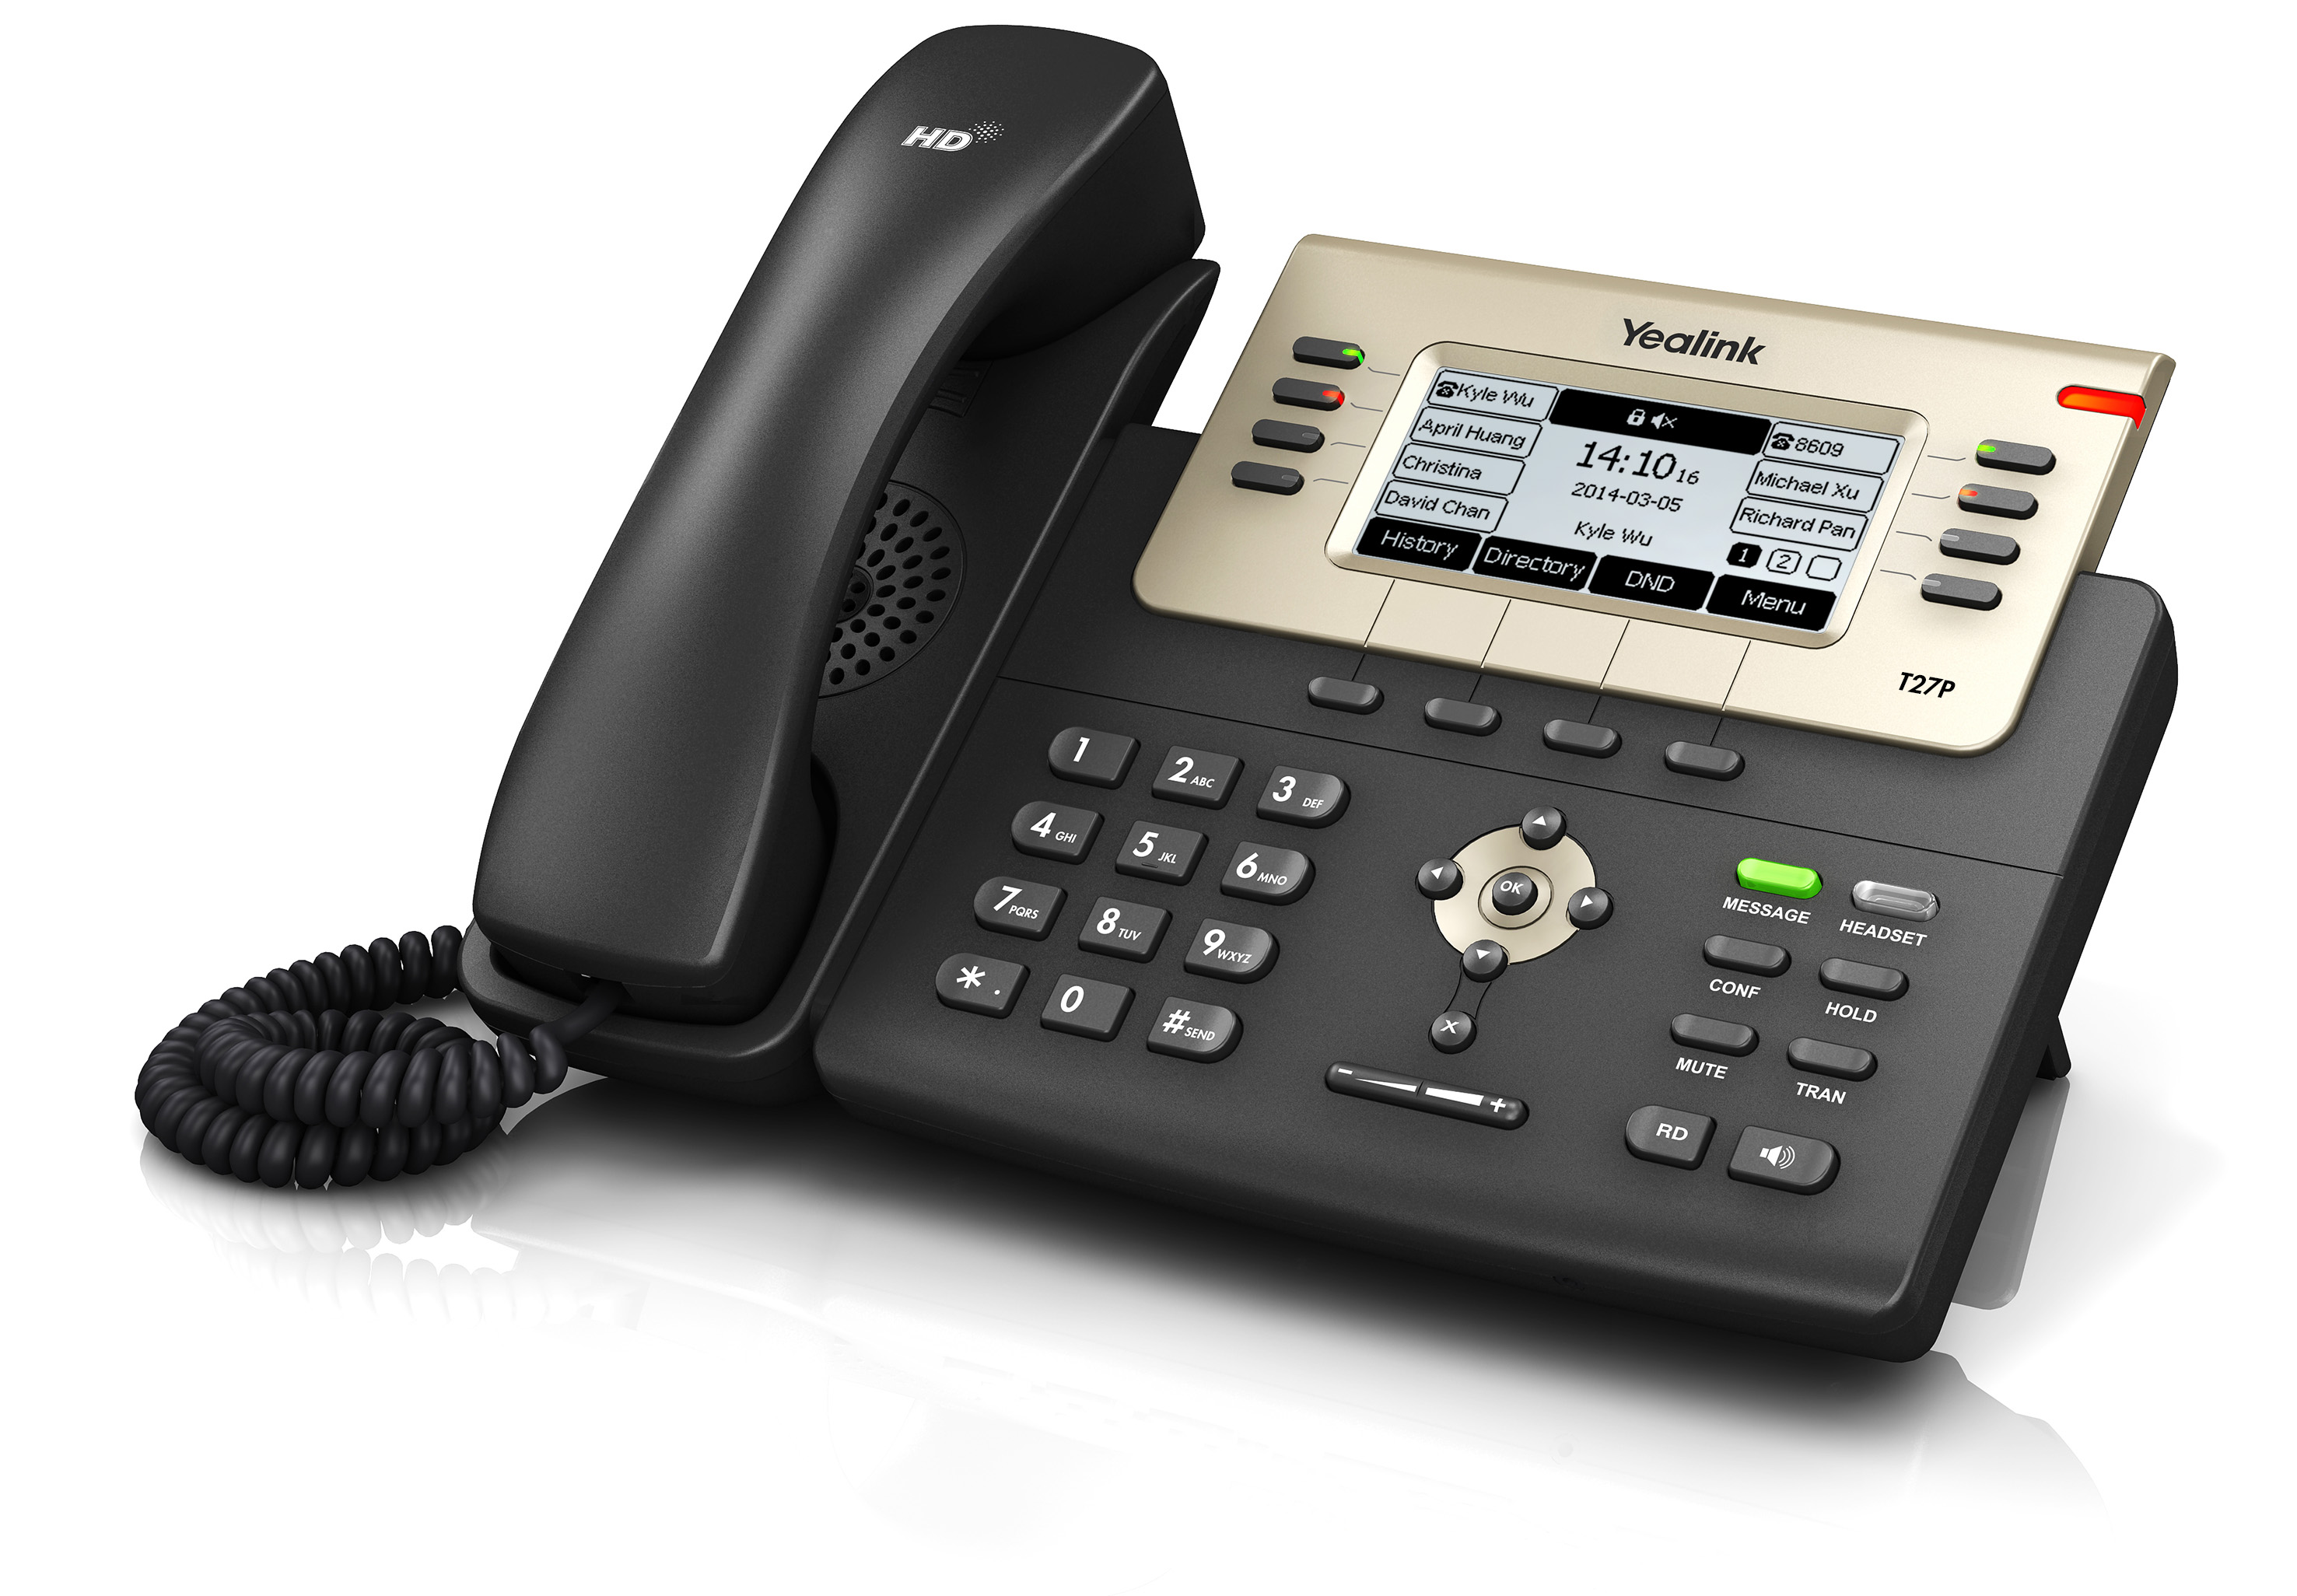 New Yealink SIP-T27P VoIP Phone